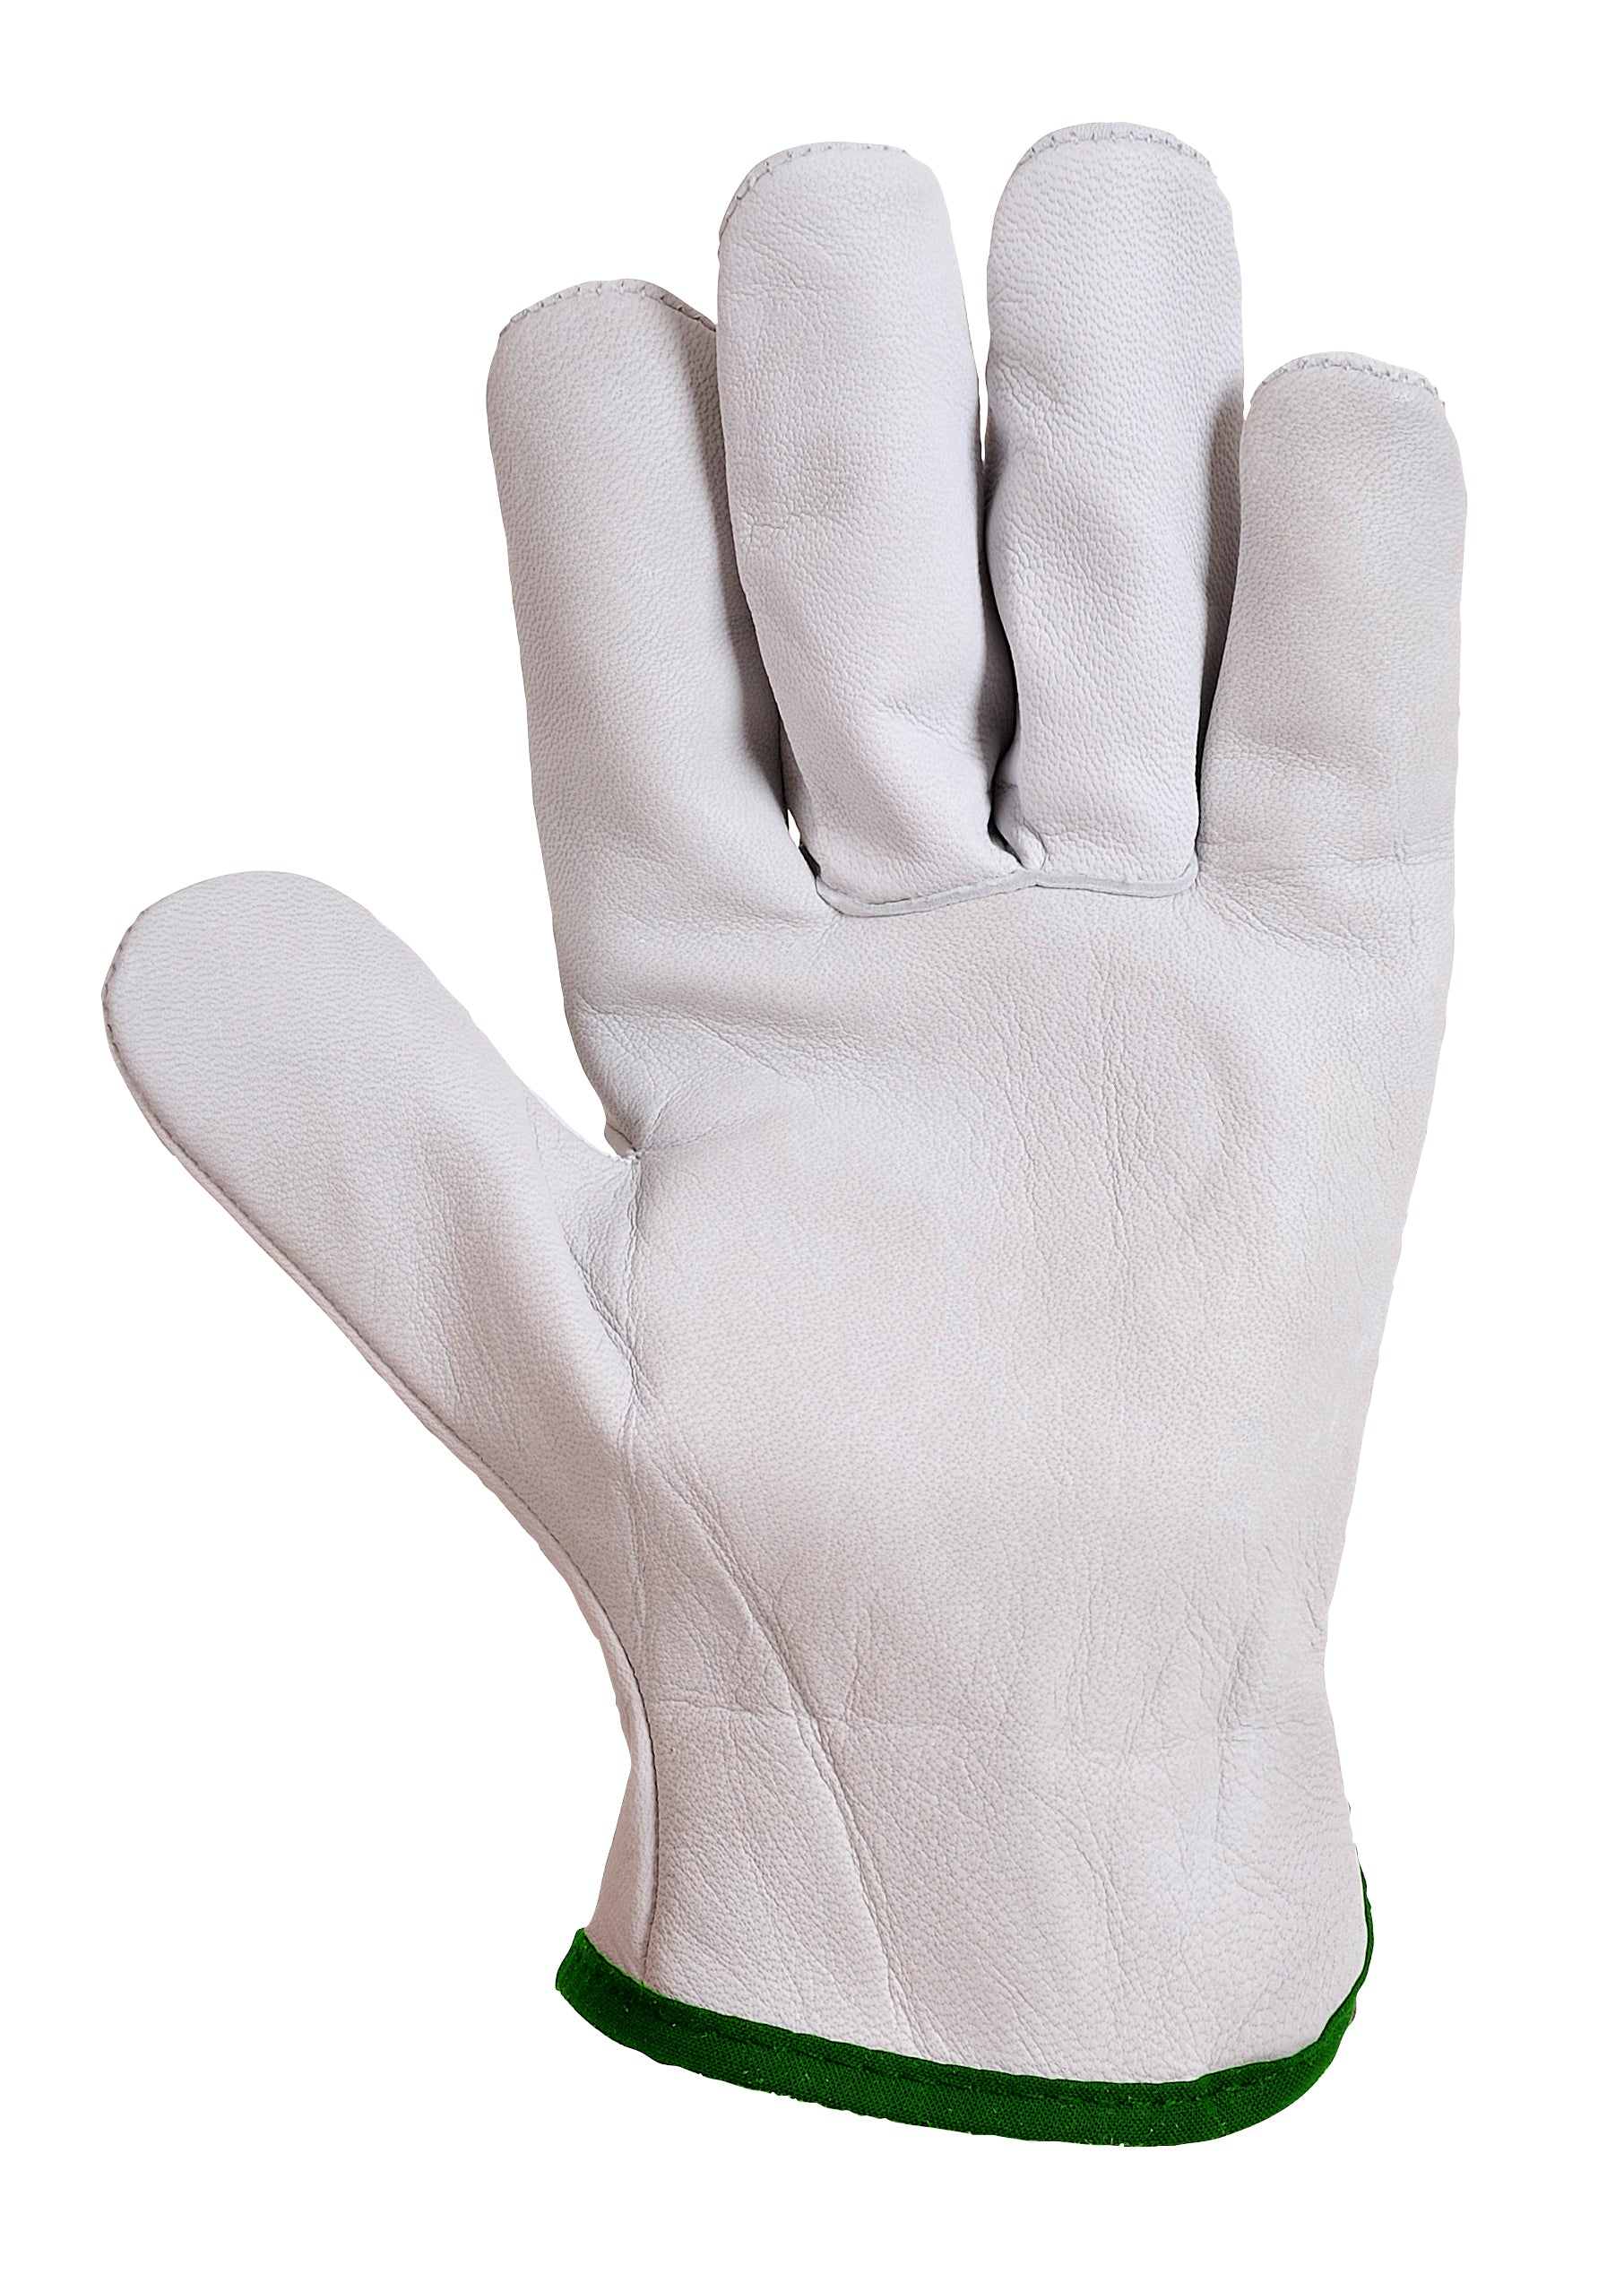 Oves Driver Glove White - A260 Palm 